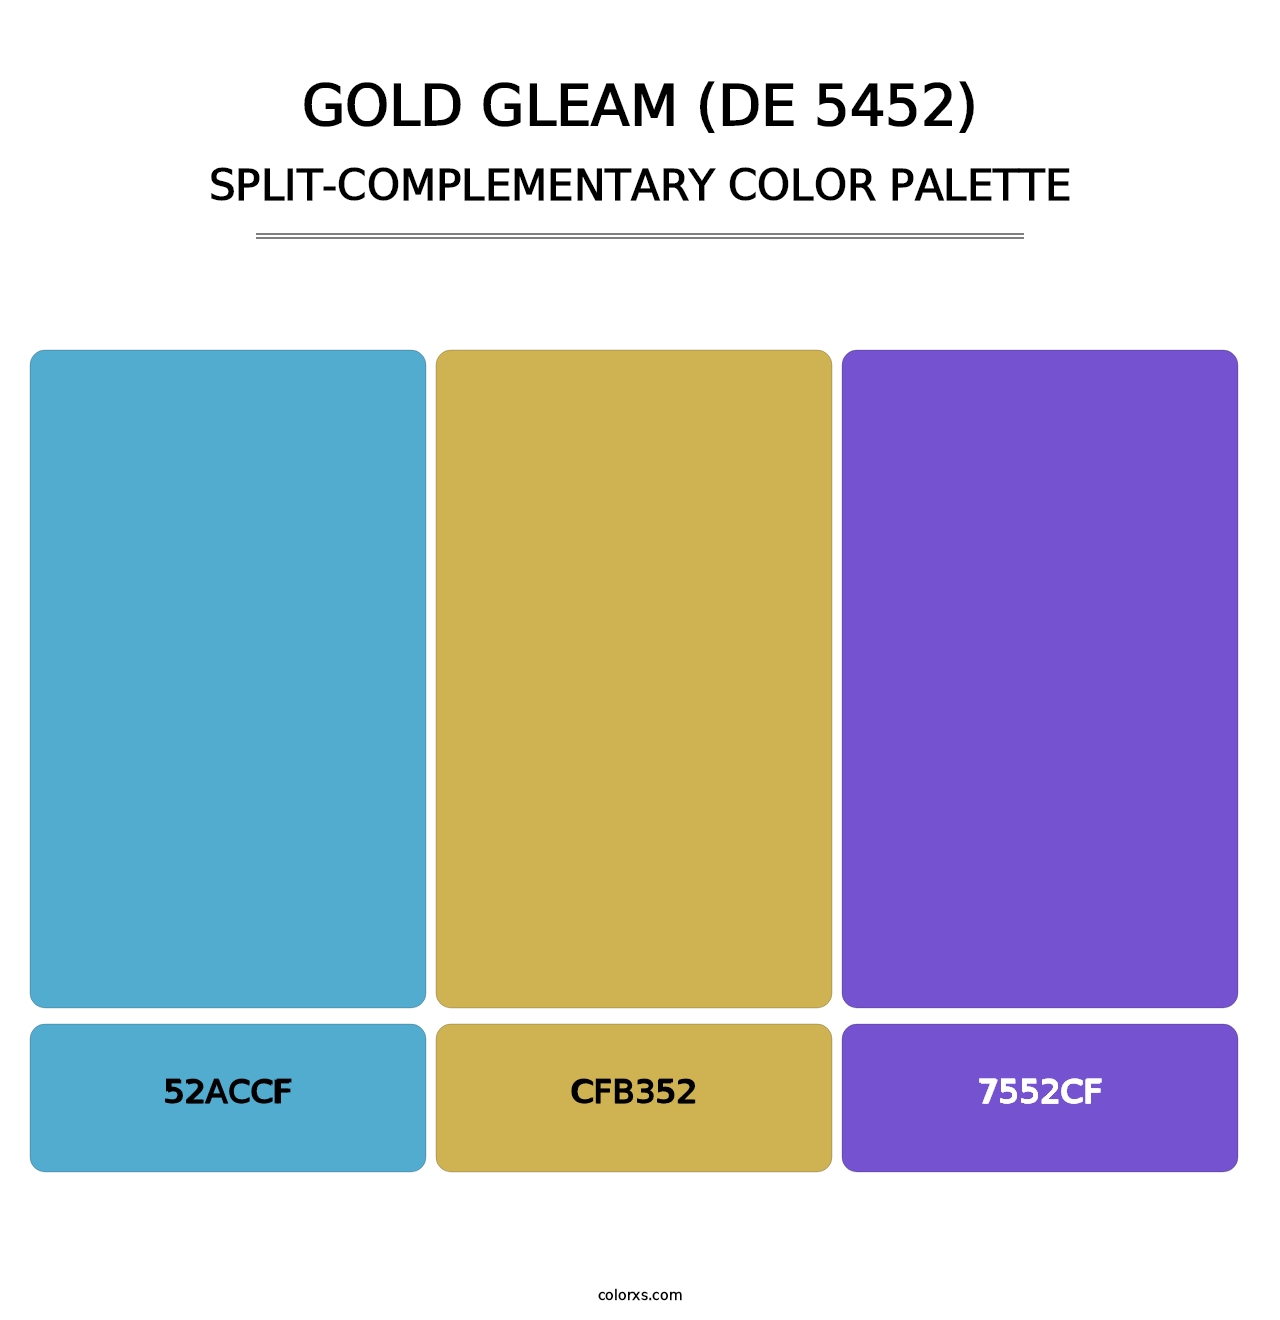 Gold Gleam (DE 5452) - Split-Complementary Color Palette